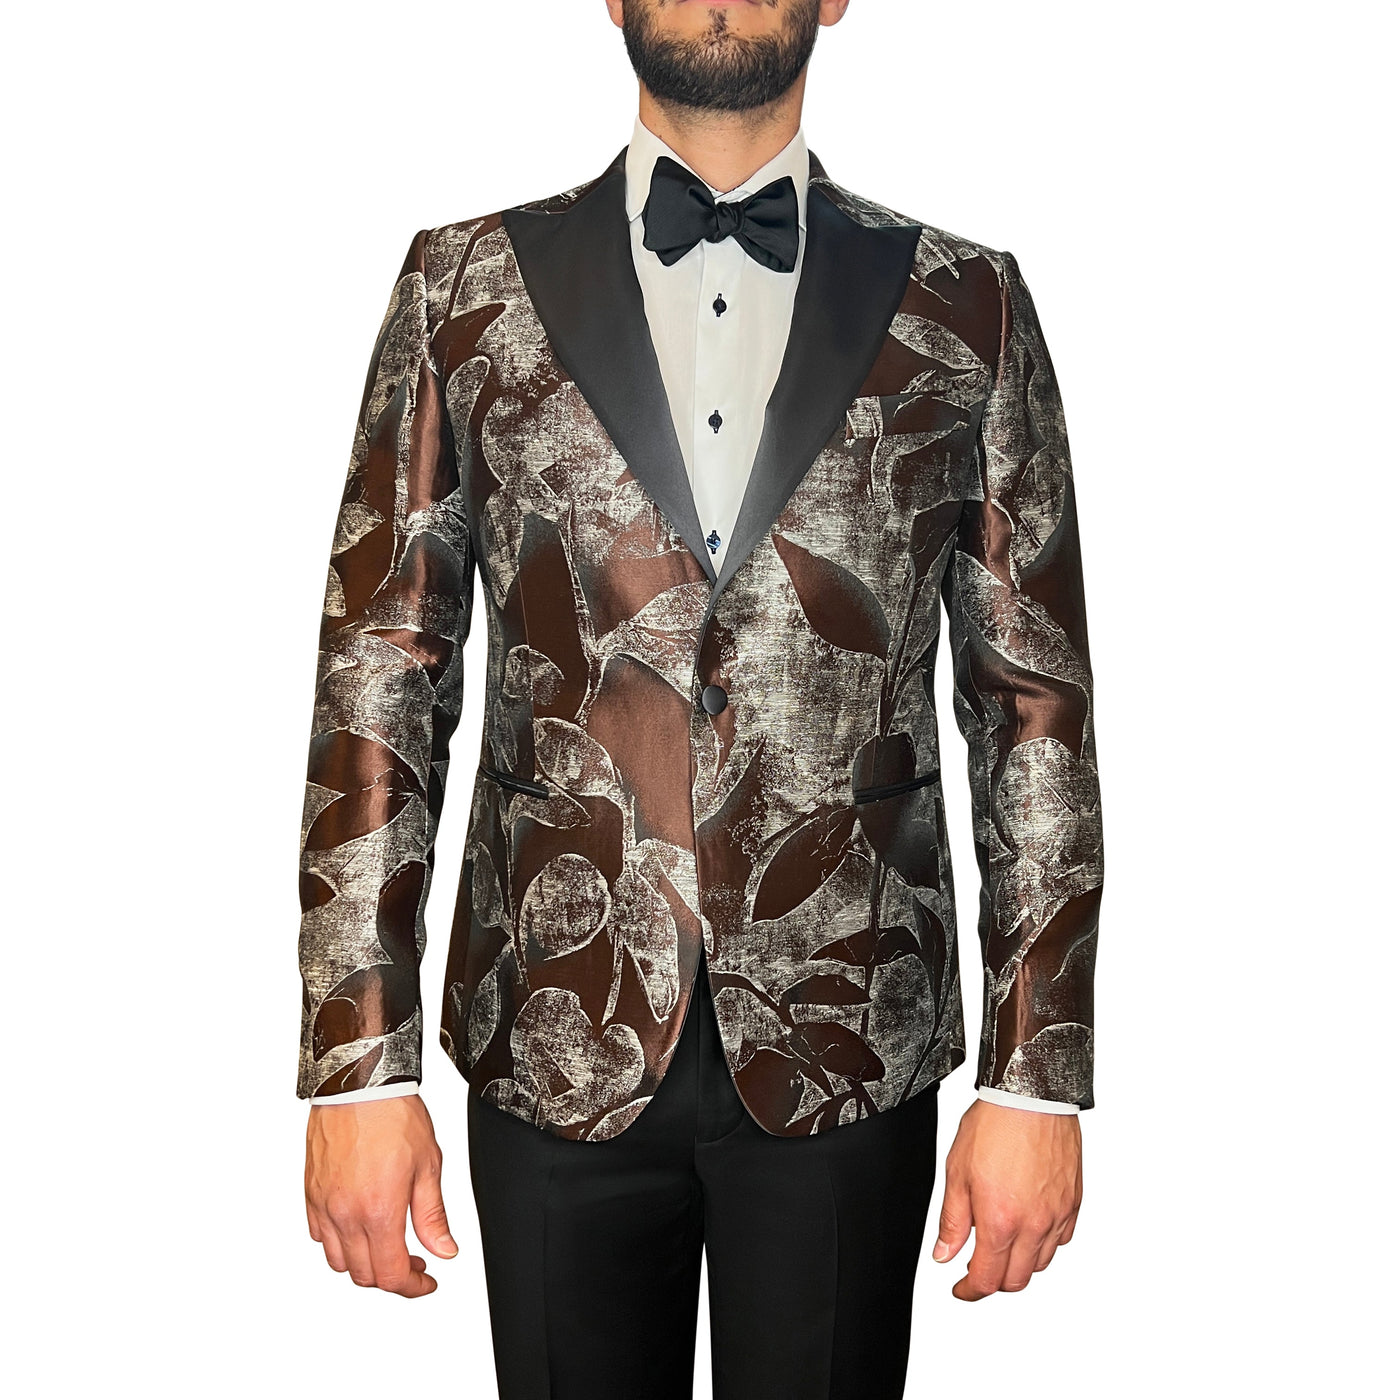 Gotstyle Fashion - Pal Zileri Tuxedo Abstract Floral Design Peak Lapel Tuxedo Jacket - Brown